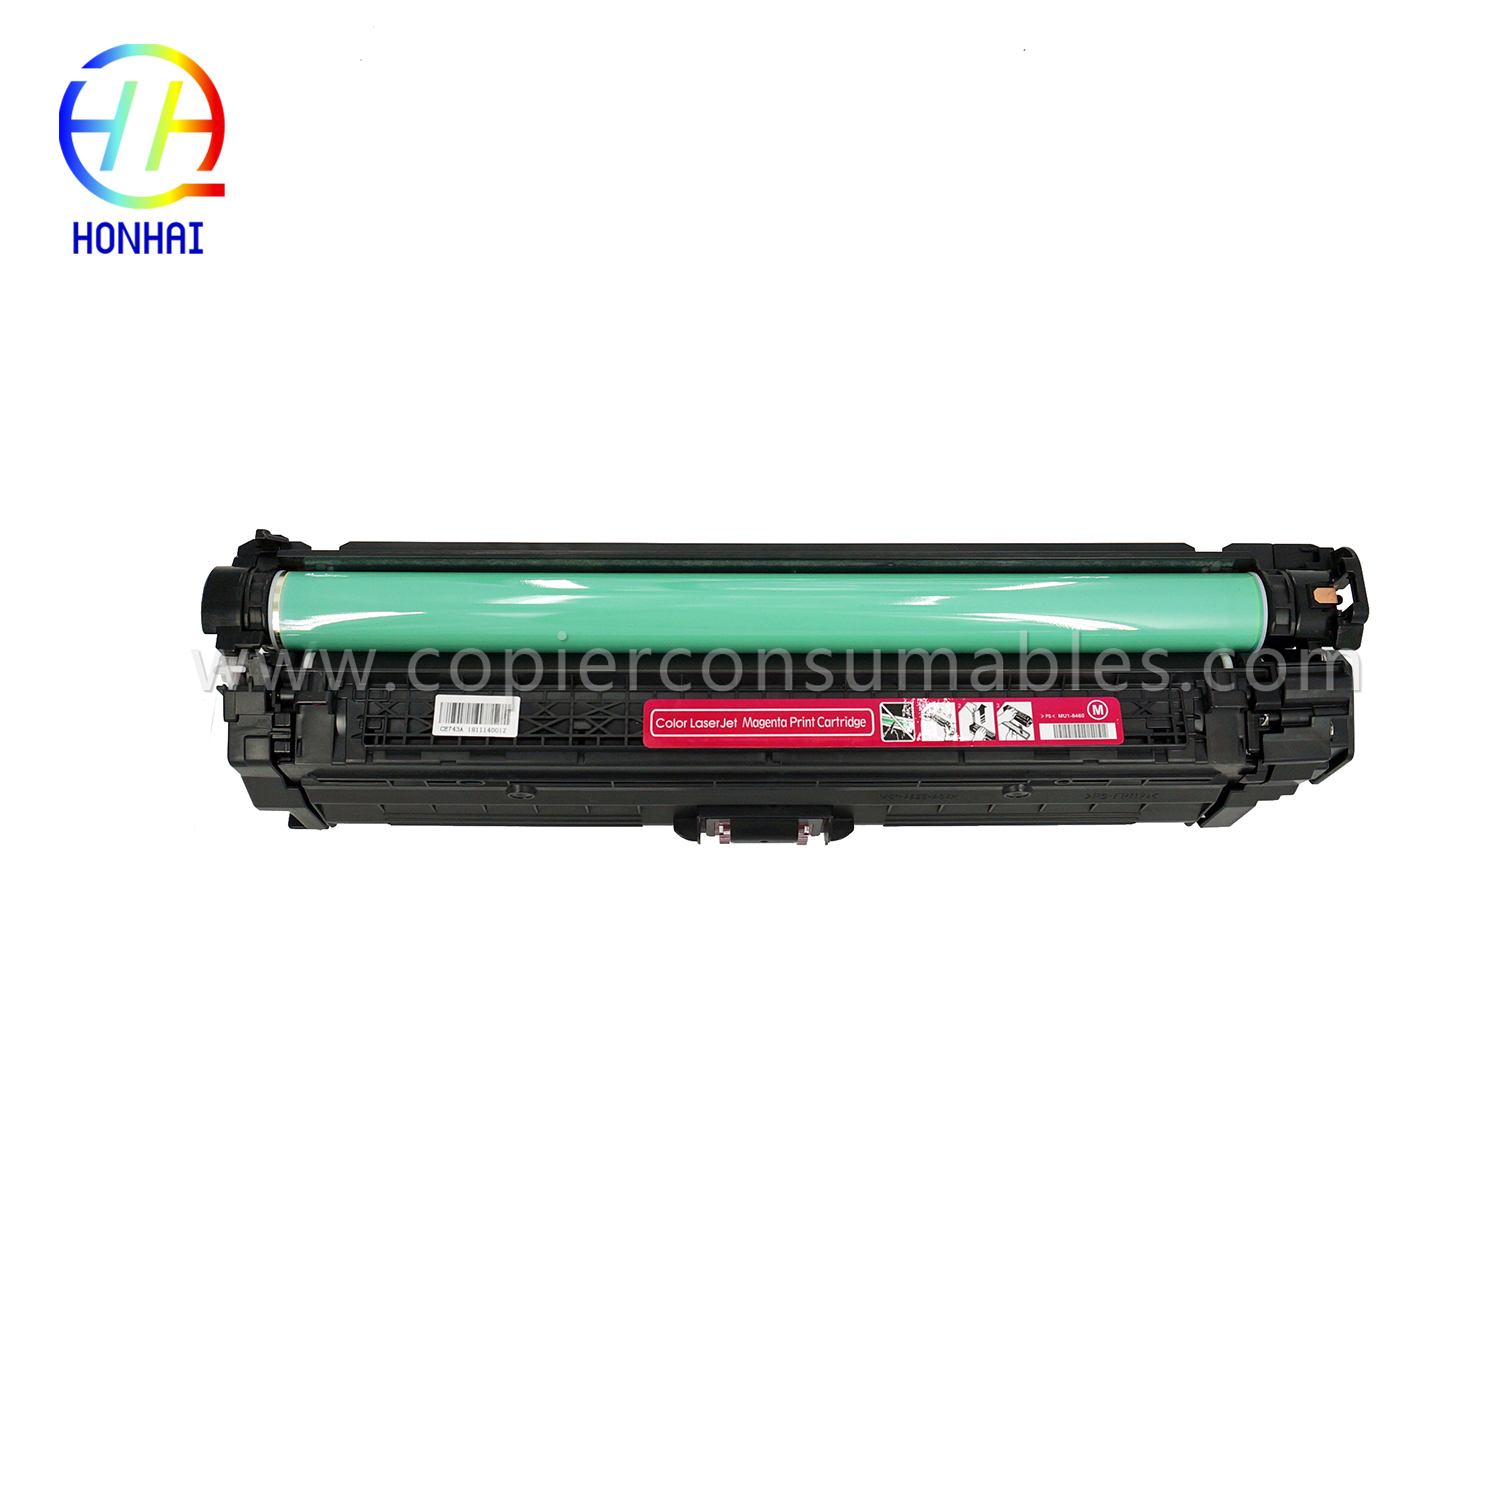 Toner Cartridge for HP Color LaserJet Pro CP5025 CP5220 CP5225 CE743A 307A